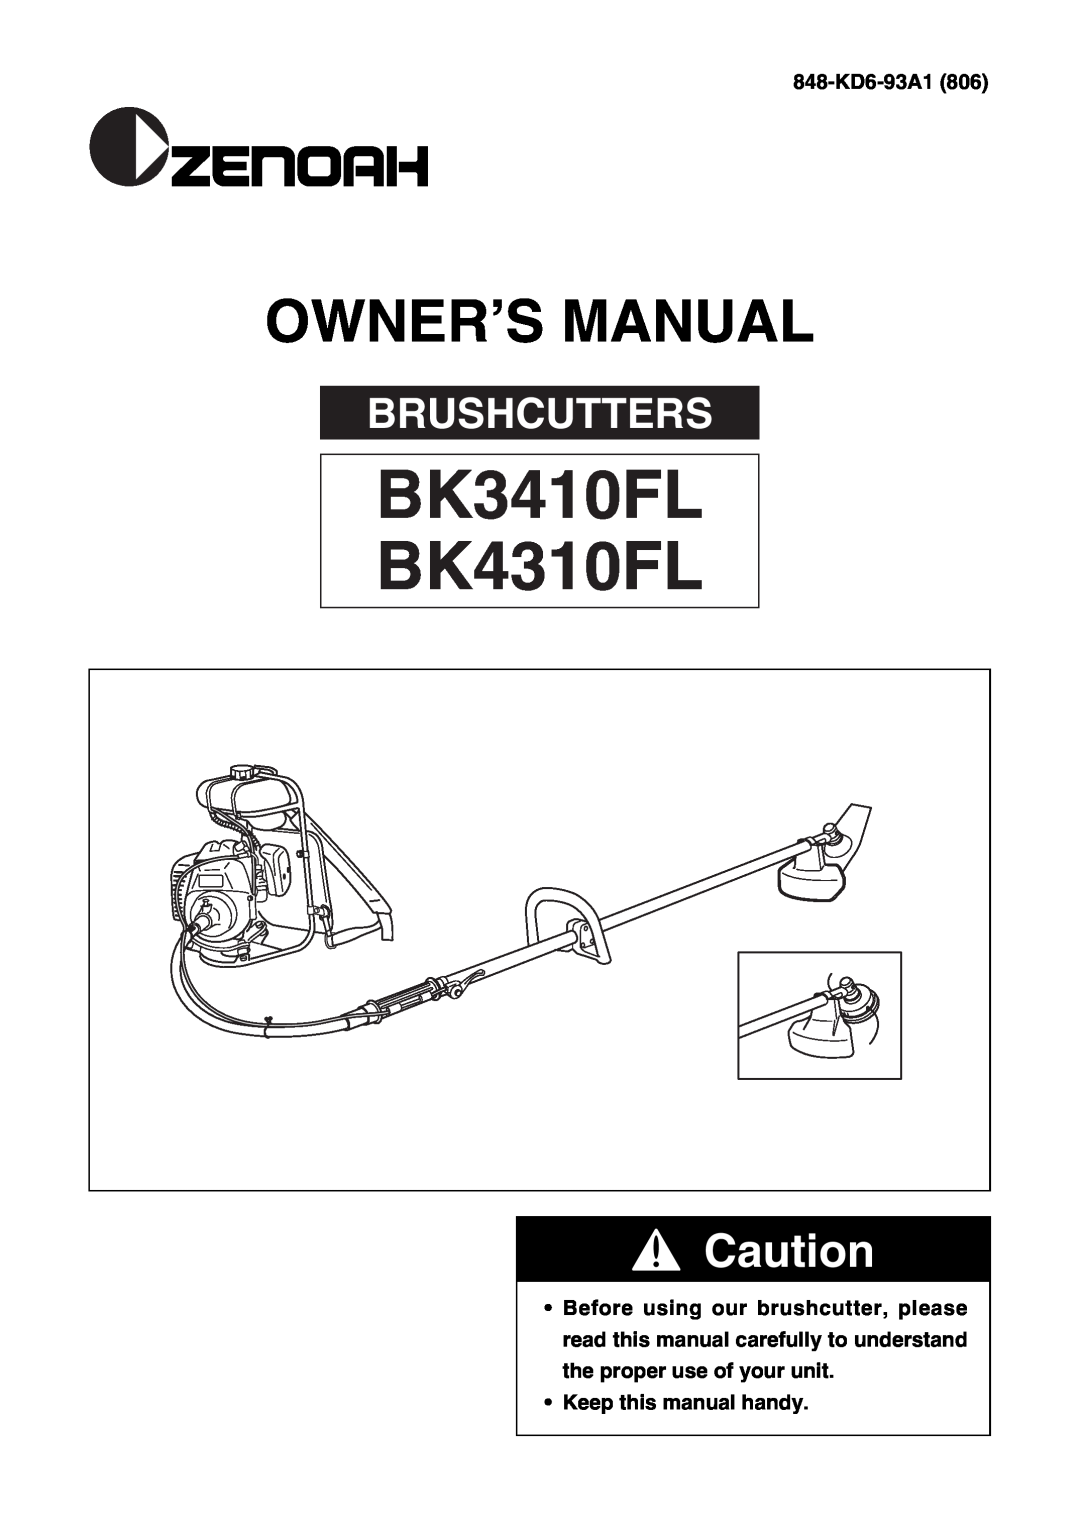 Zenoah owner manual BK3410FL BK4310FL, Owner’S Manual, Brushcutters, 848-KD6-93A1, Keep this manual handy 